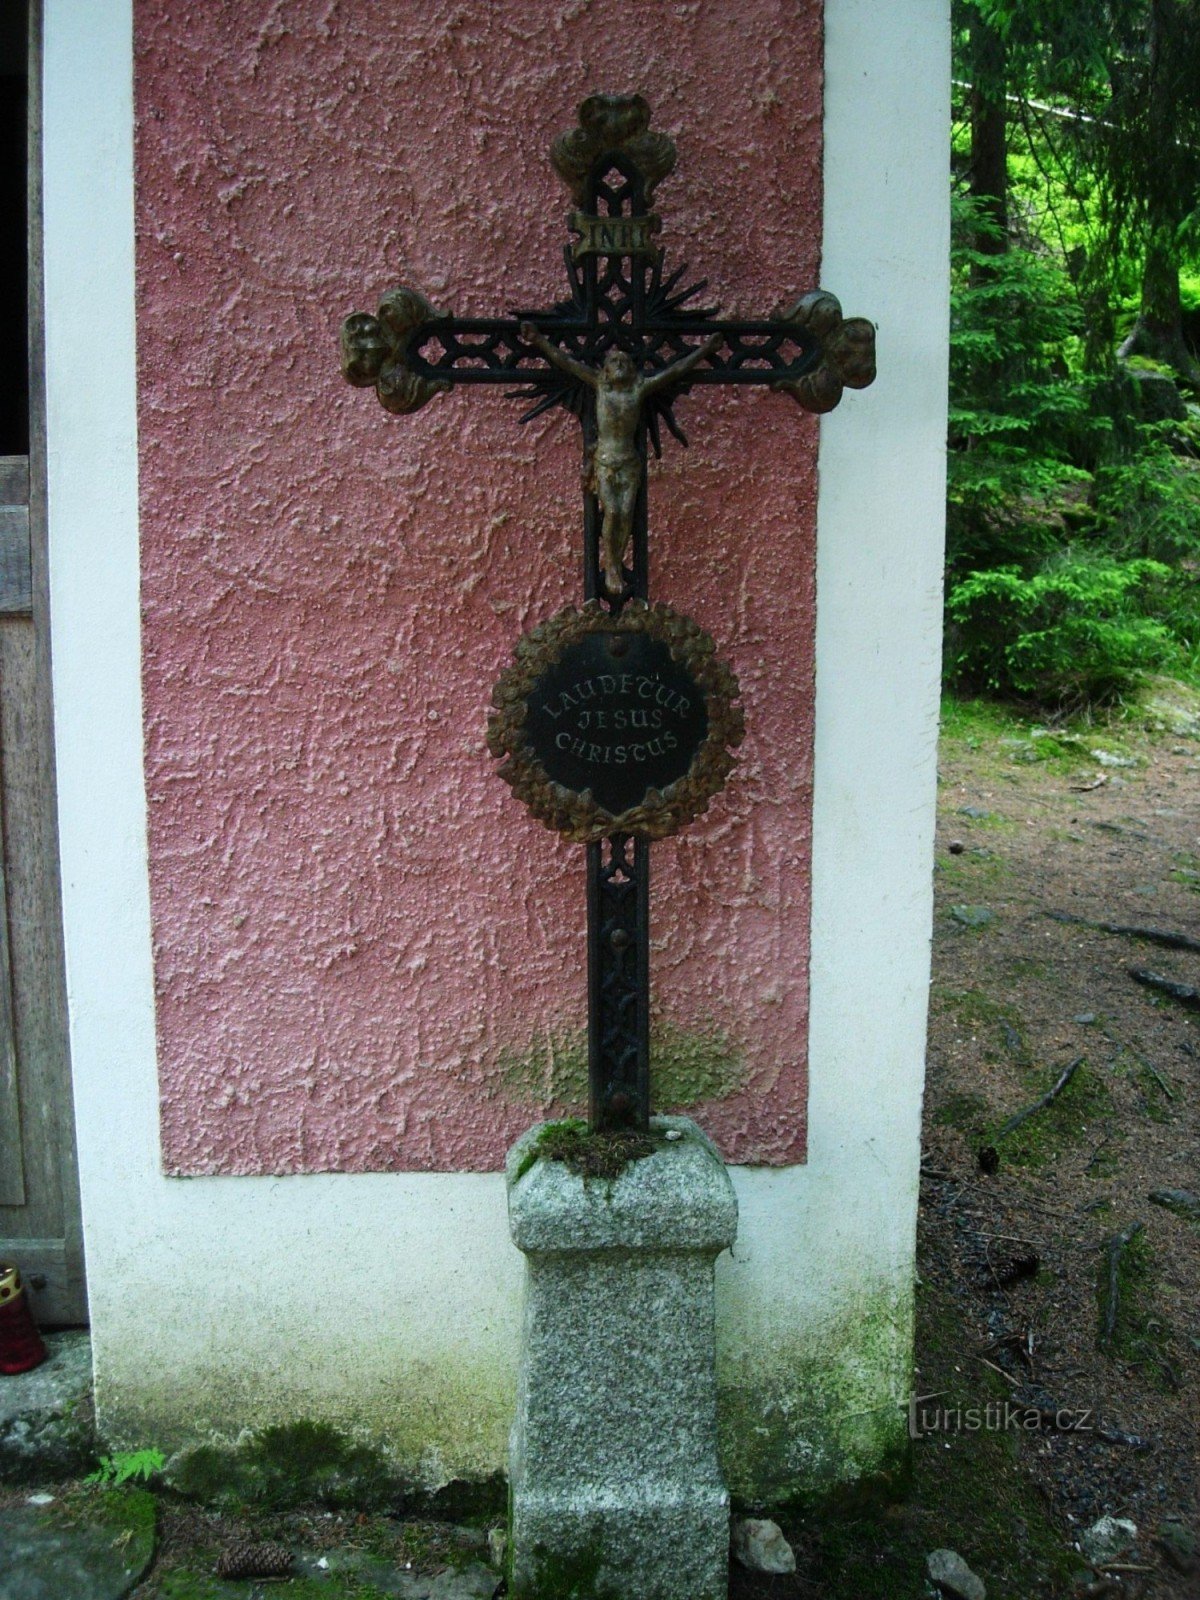 Vintířová礼拝堂の前にある鋳鉄製の十字架